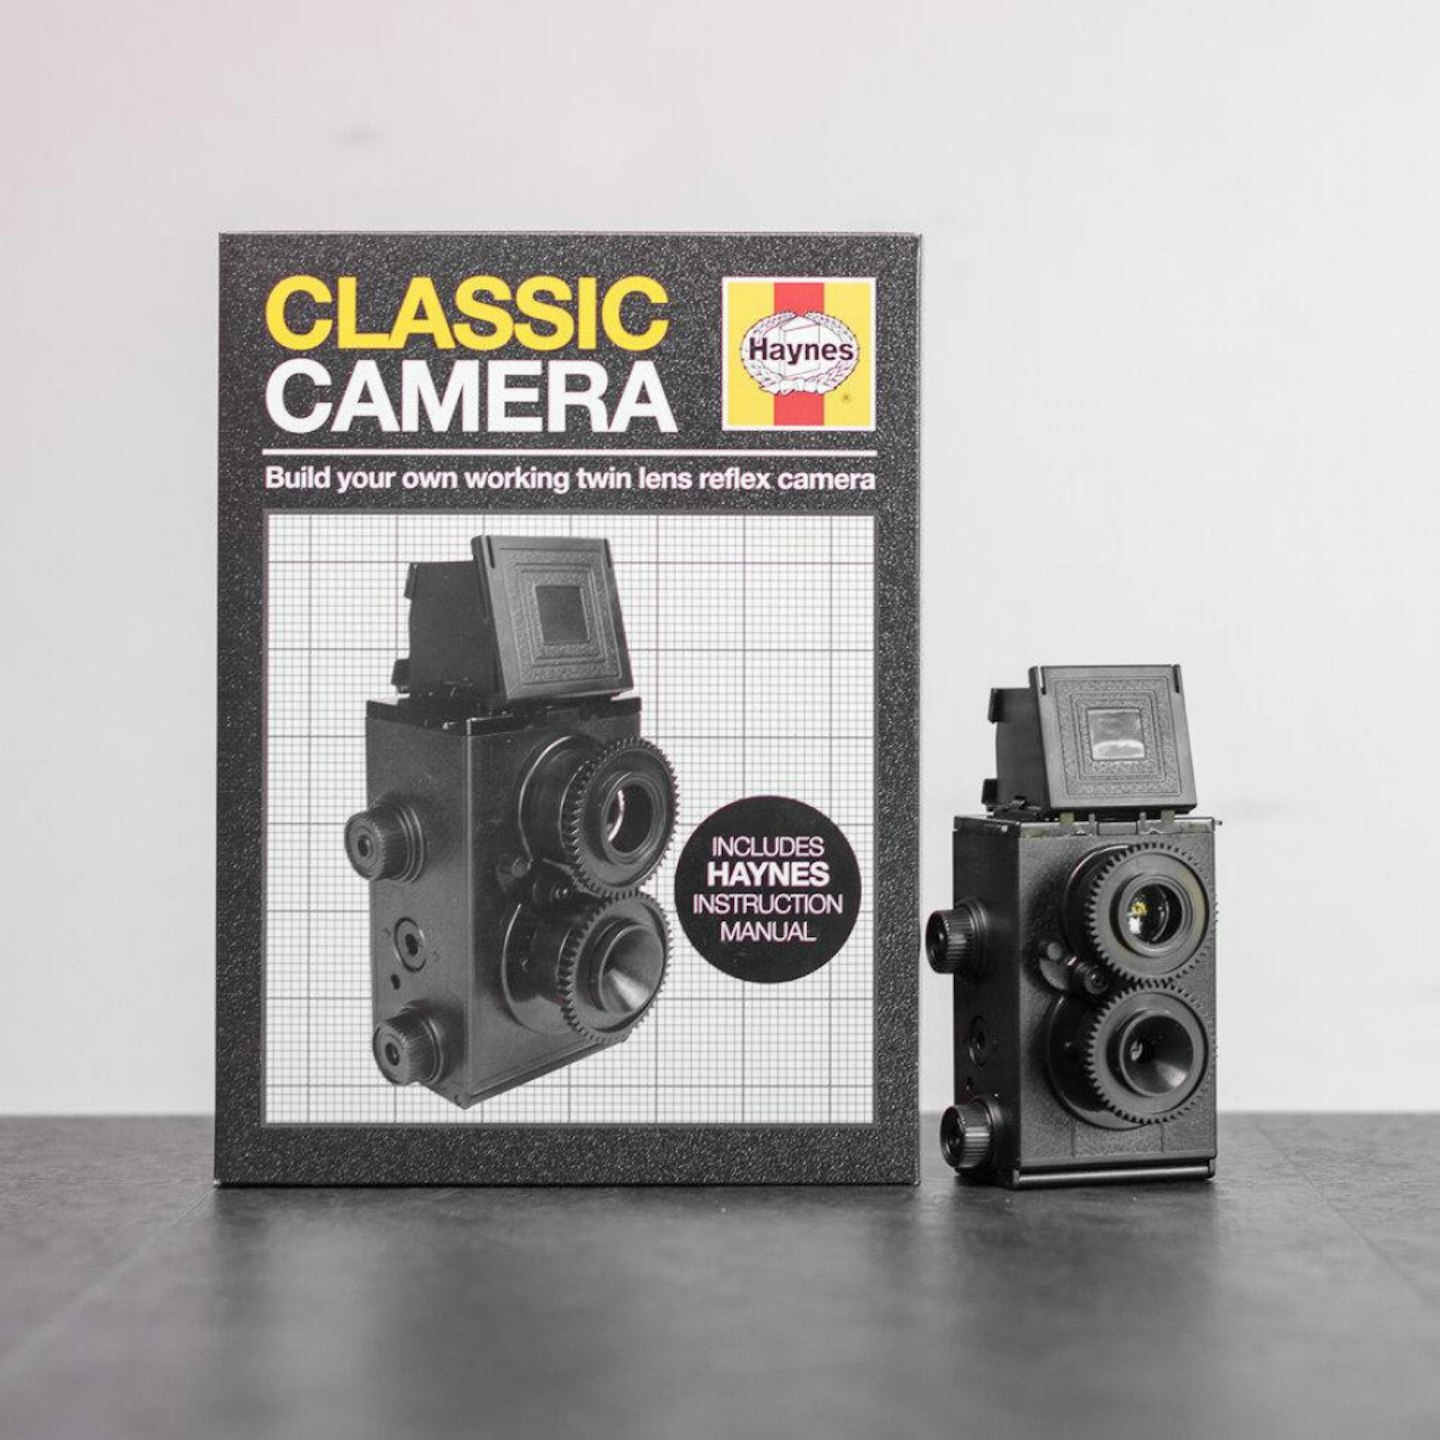 Haynes Classic Camera Making Kit